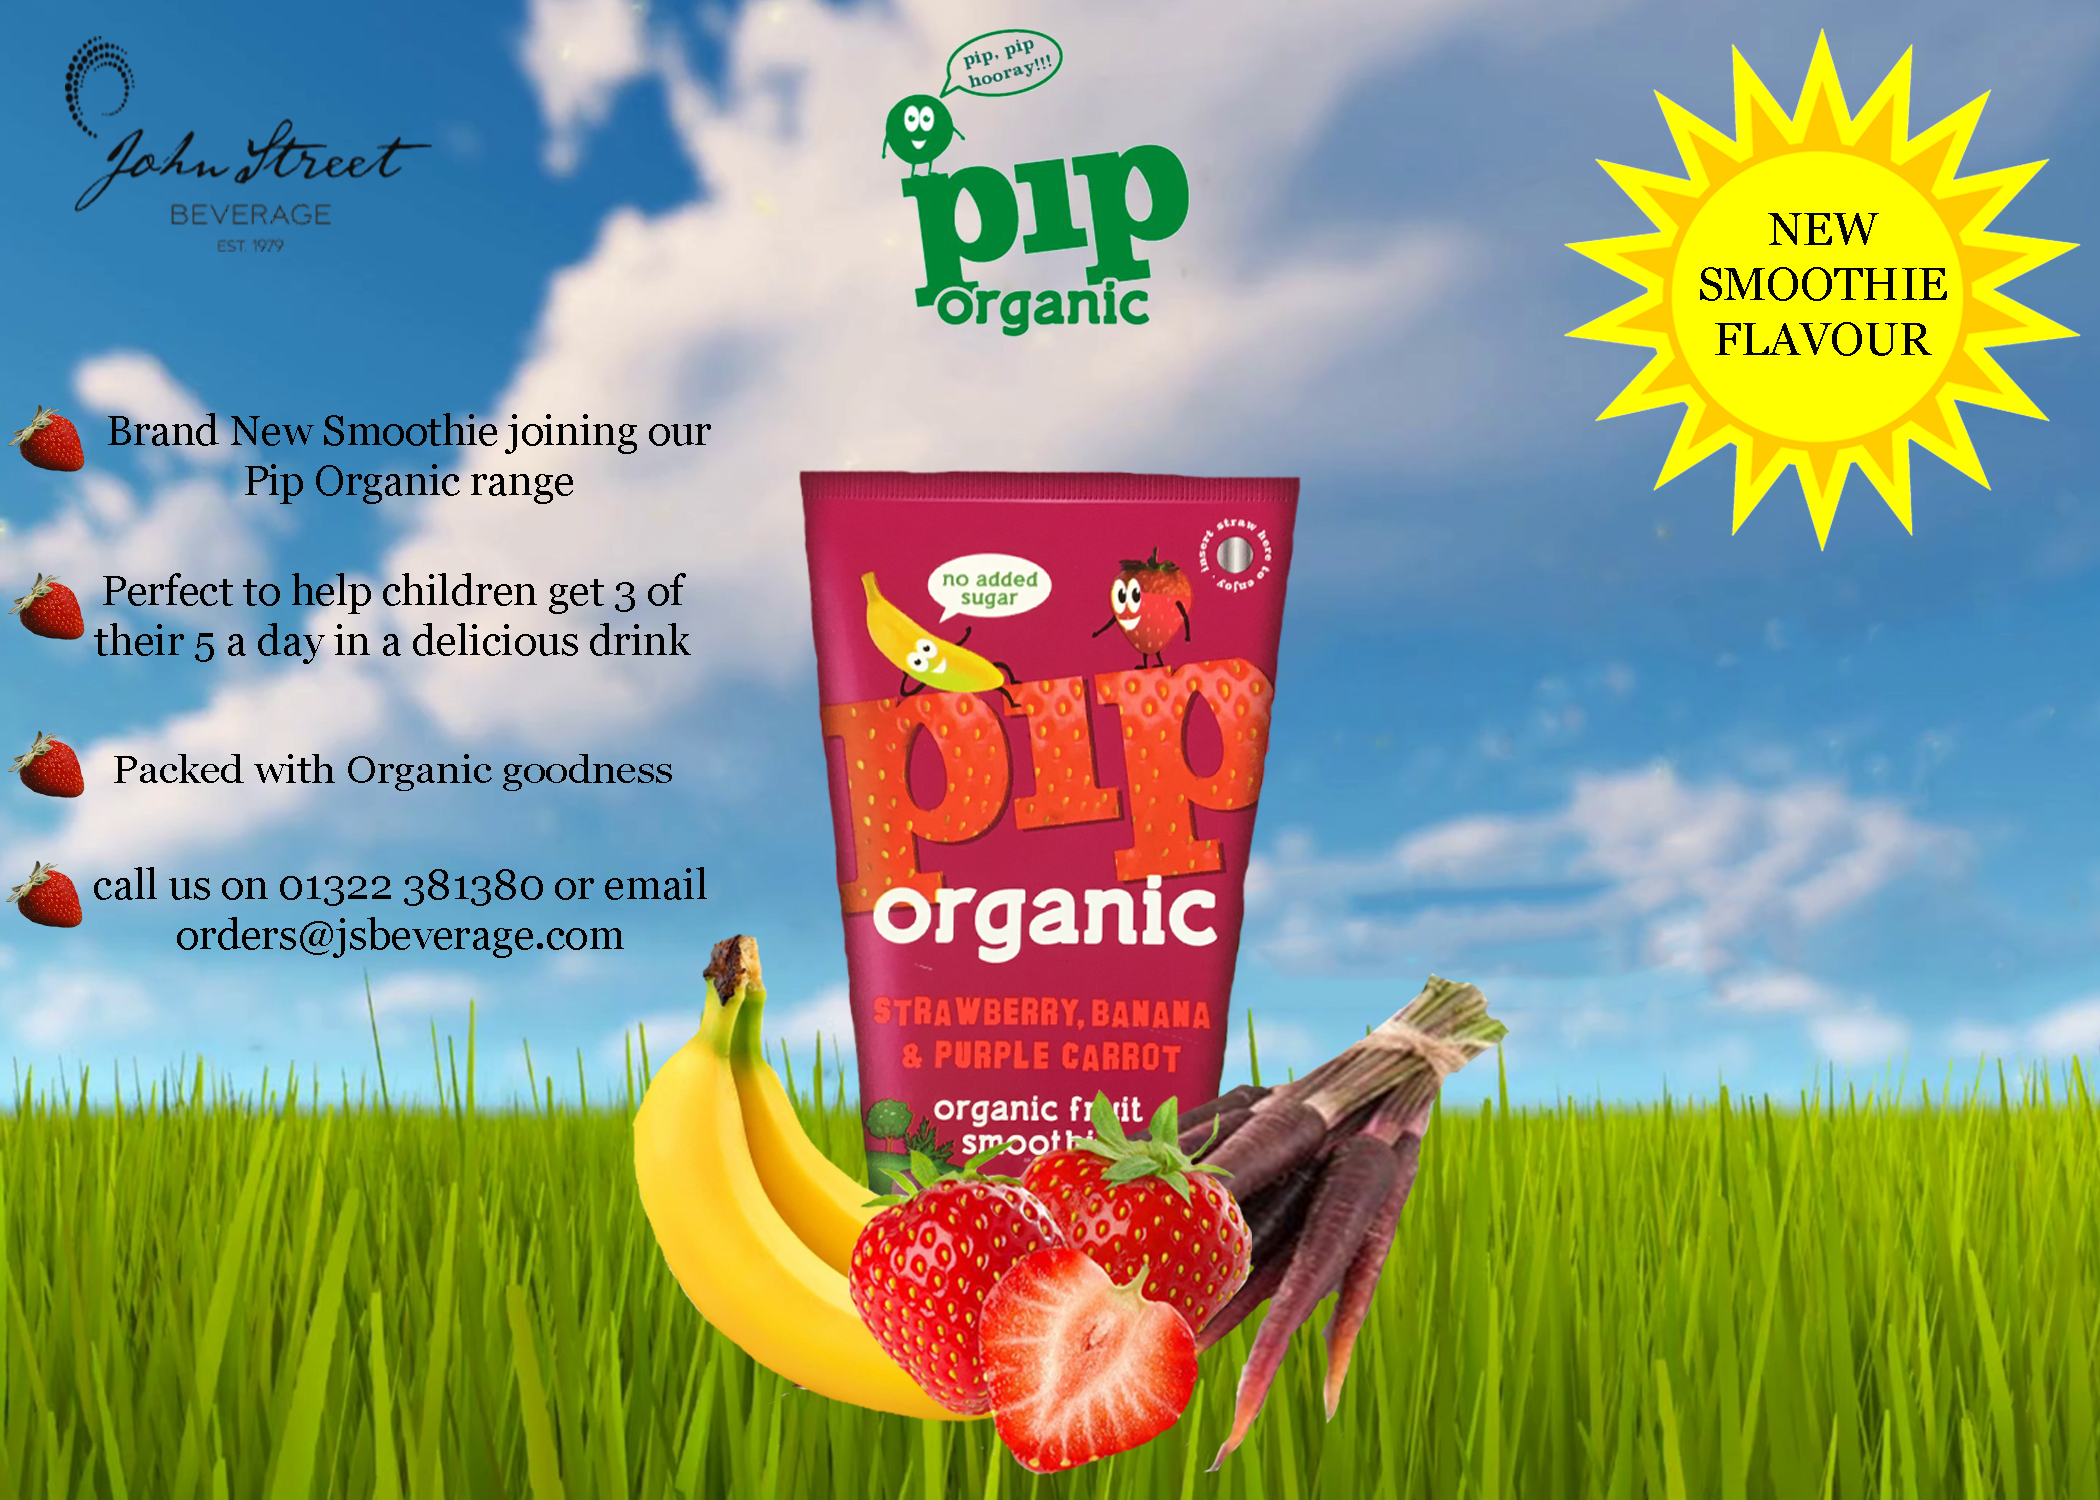 New Pip Organic Smoothie!